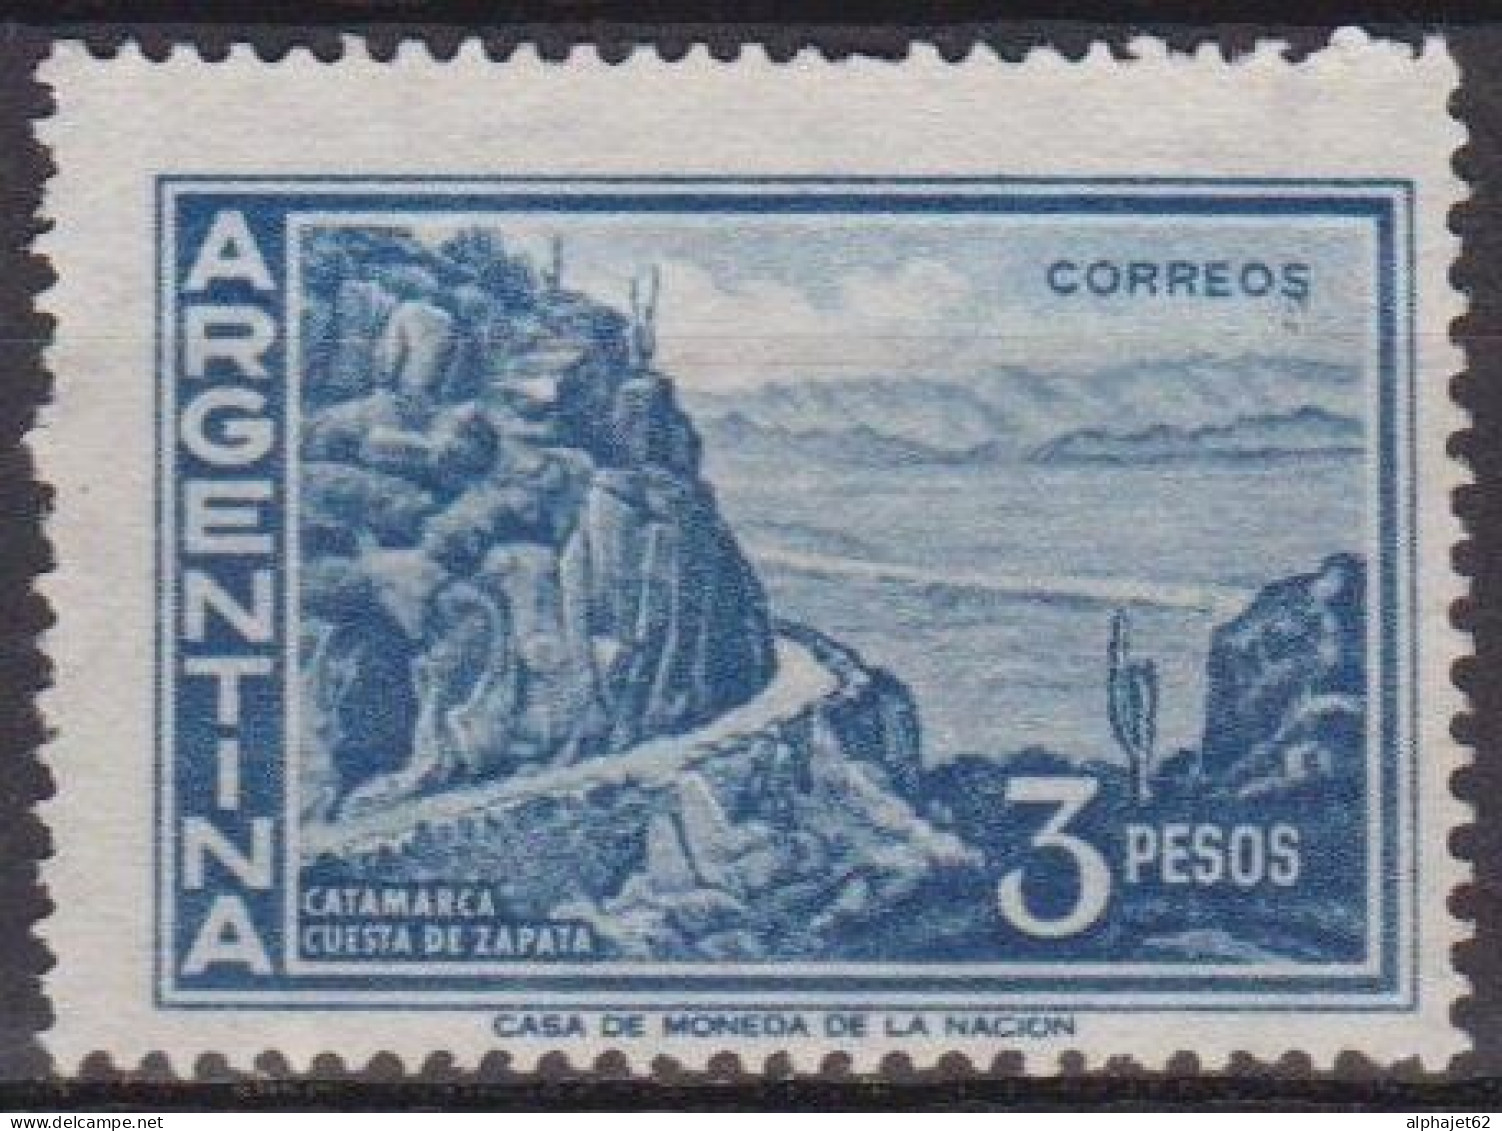 Tourisme - ARGENTINE - Cote De Zapata - N° 605 * - 1959 - Neufs